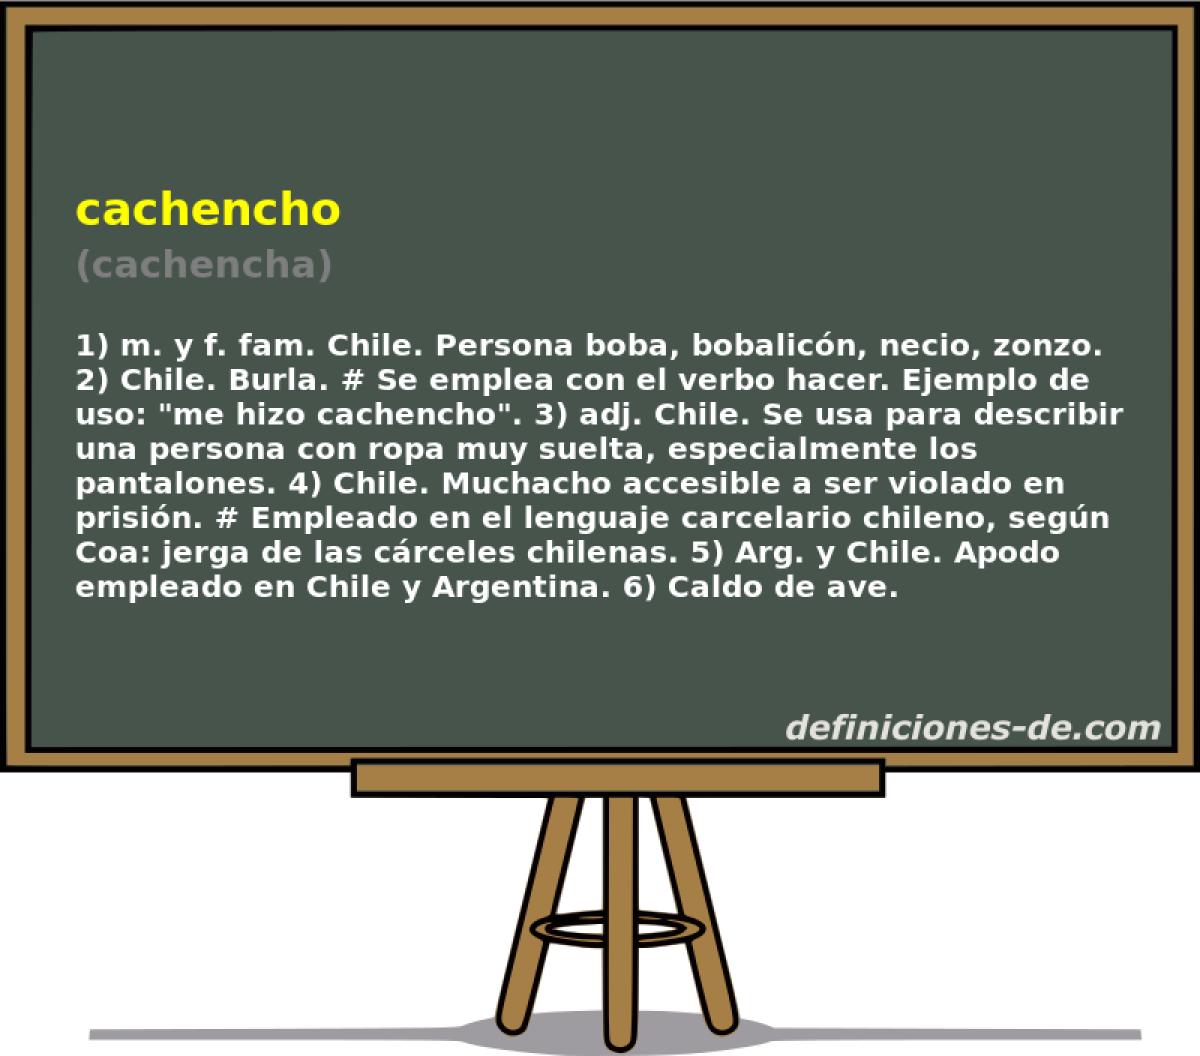 cachencho (cachencha)